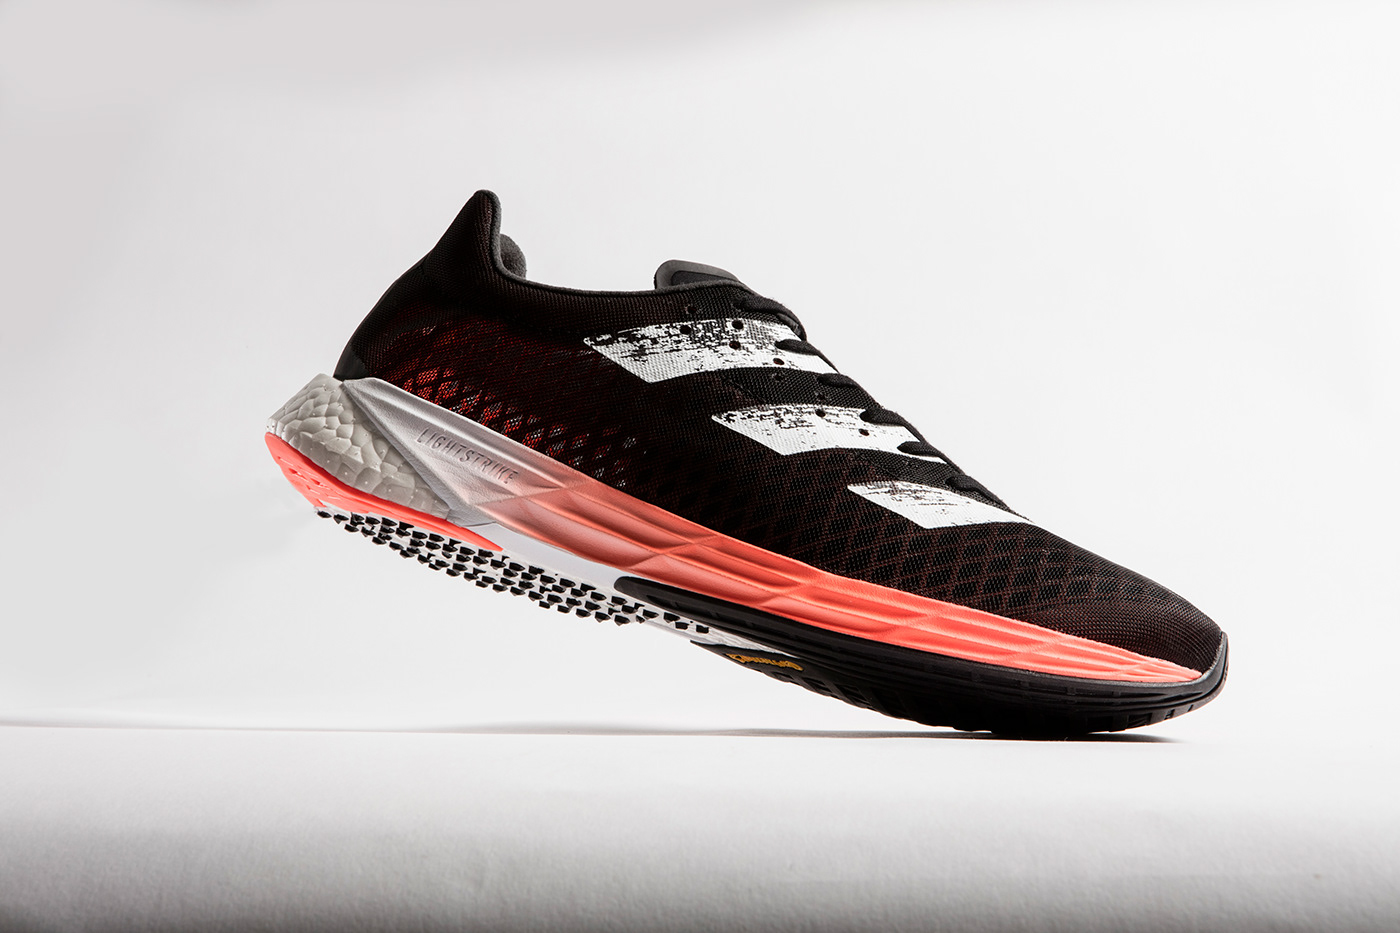 adidas basketball footwear innovation lightstrike lightweight MIDSOLE Responsive running sports